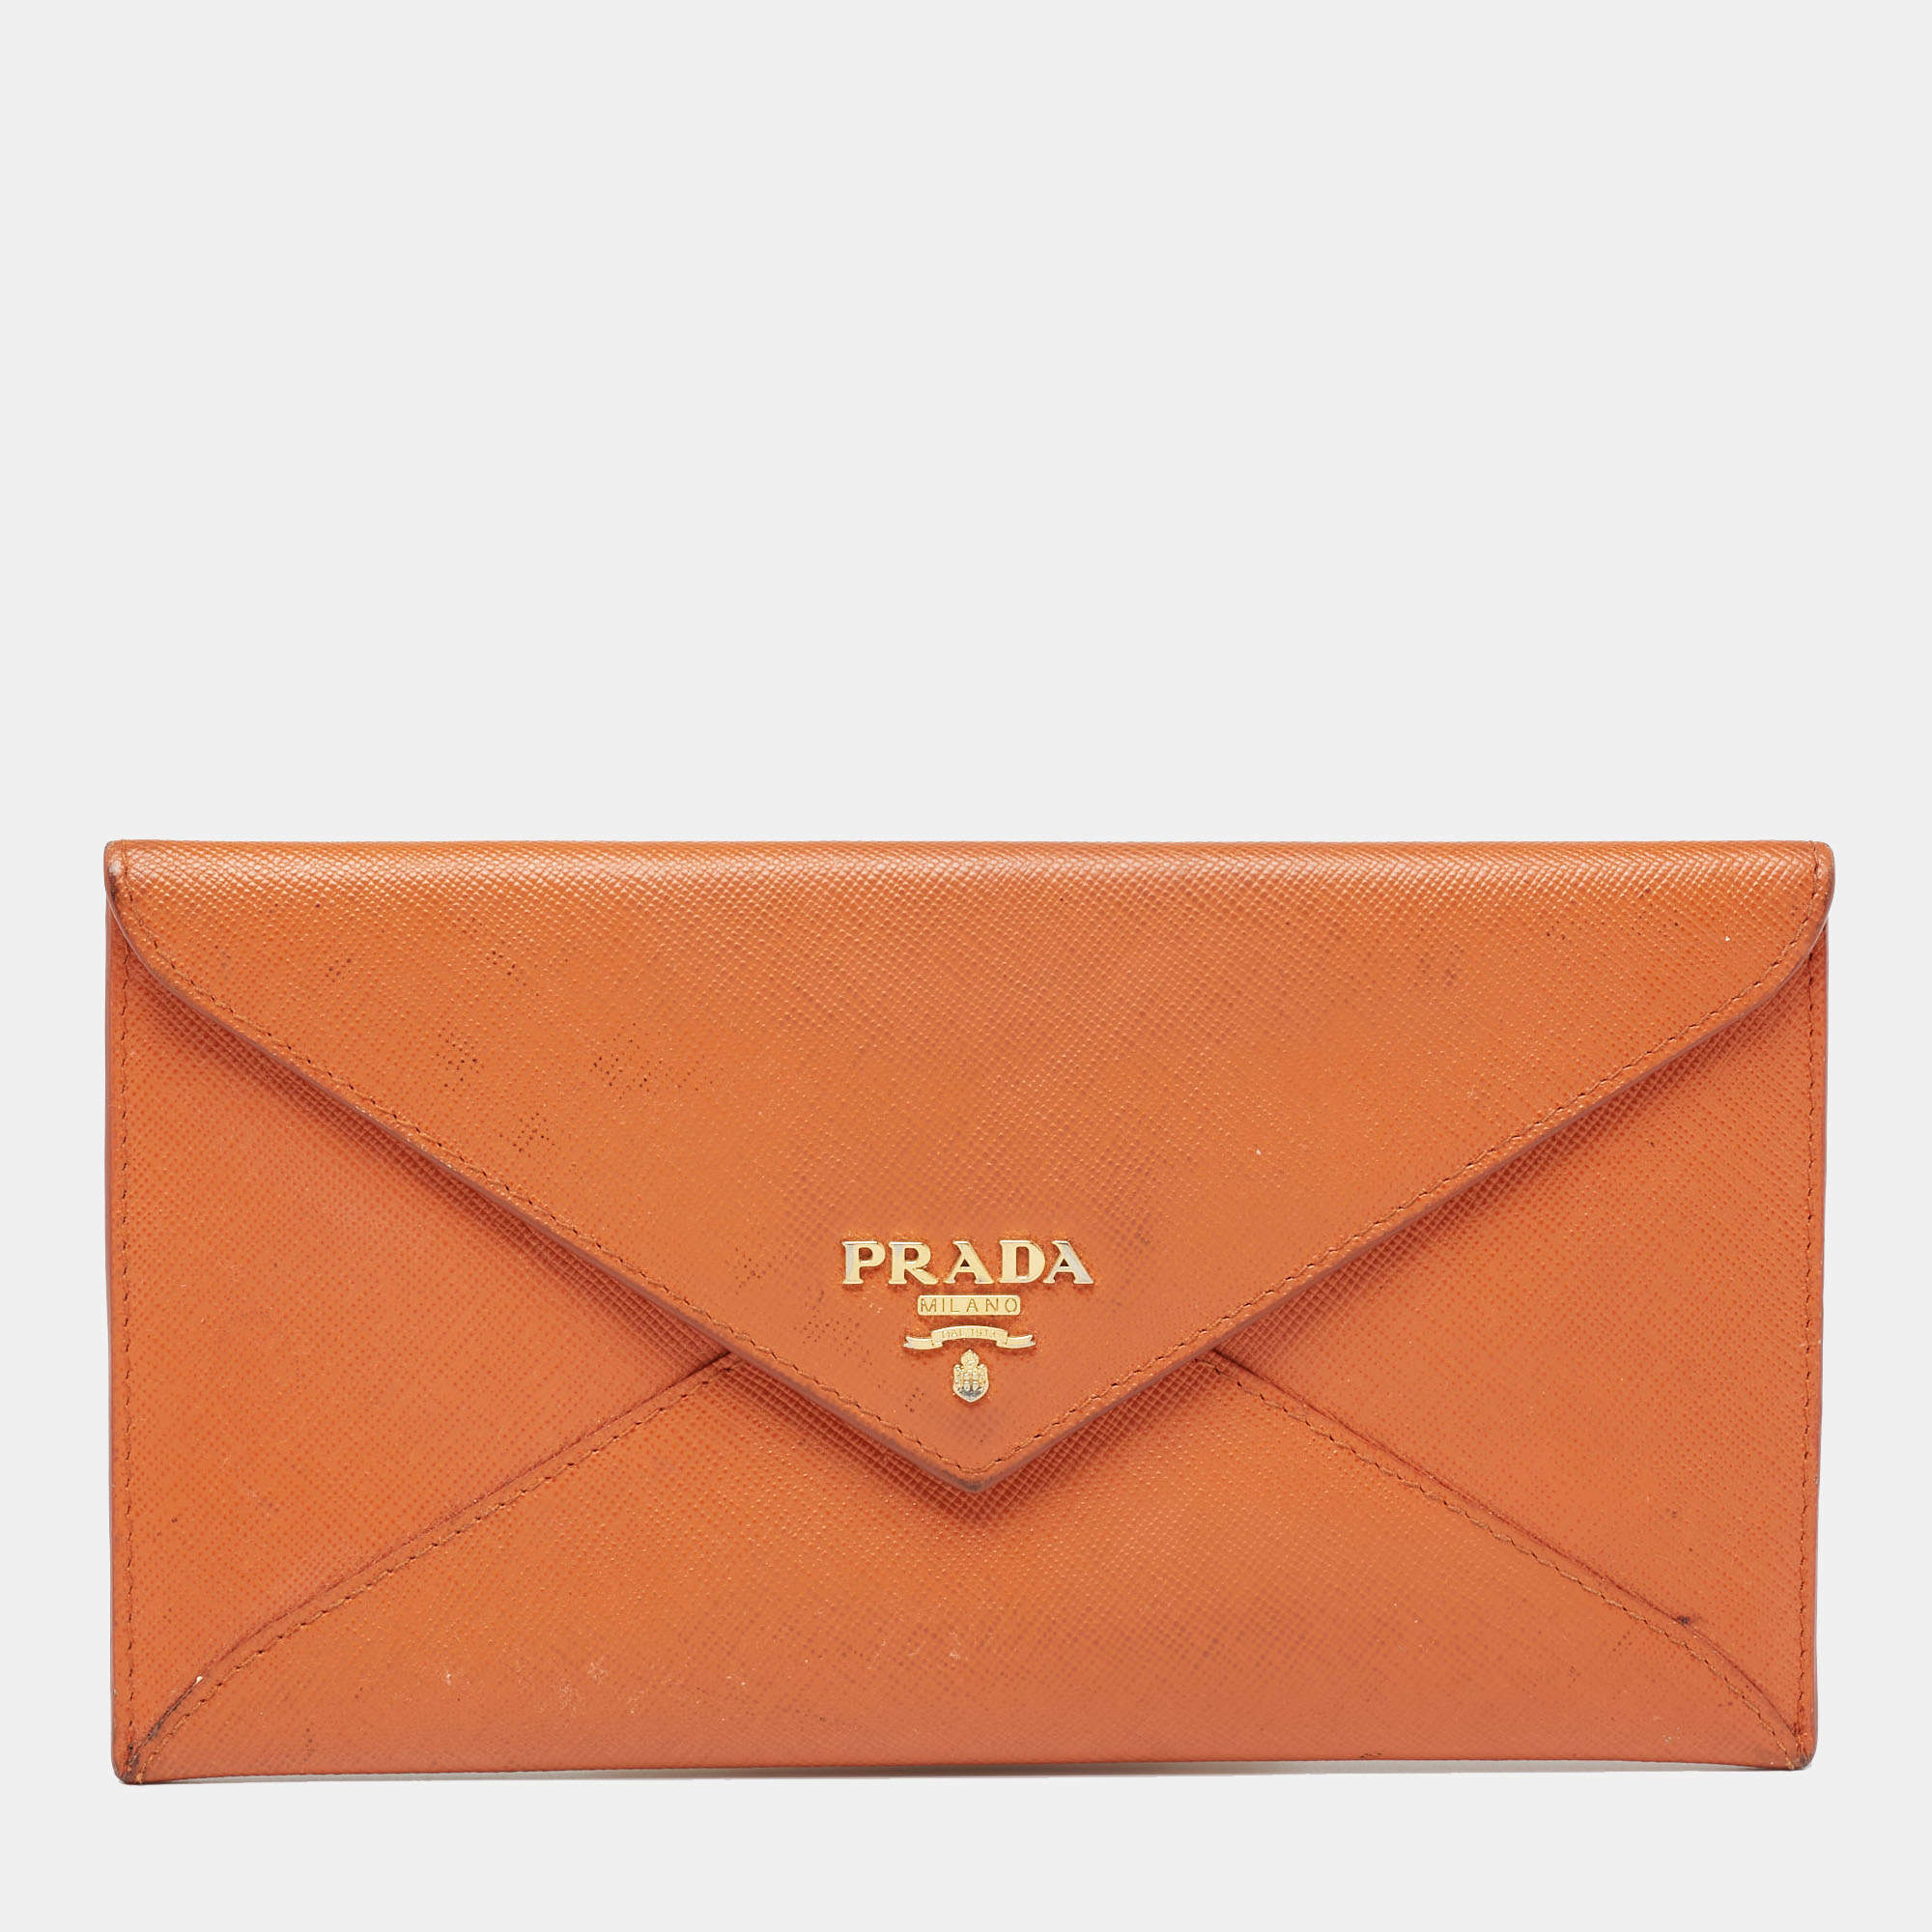 Prada Orange Saffiano Leather Envelope Wallet Prada | The Luxury Closet